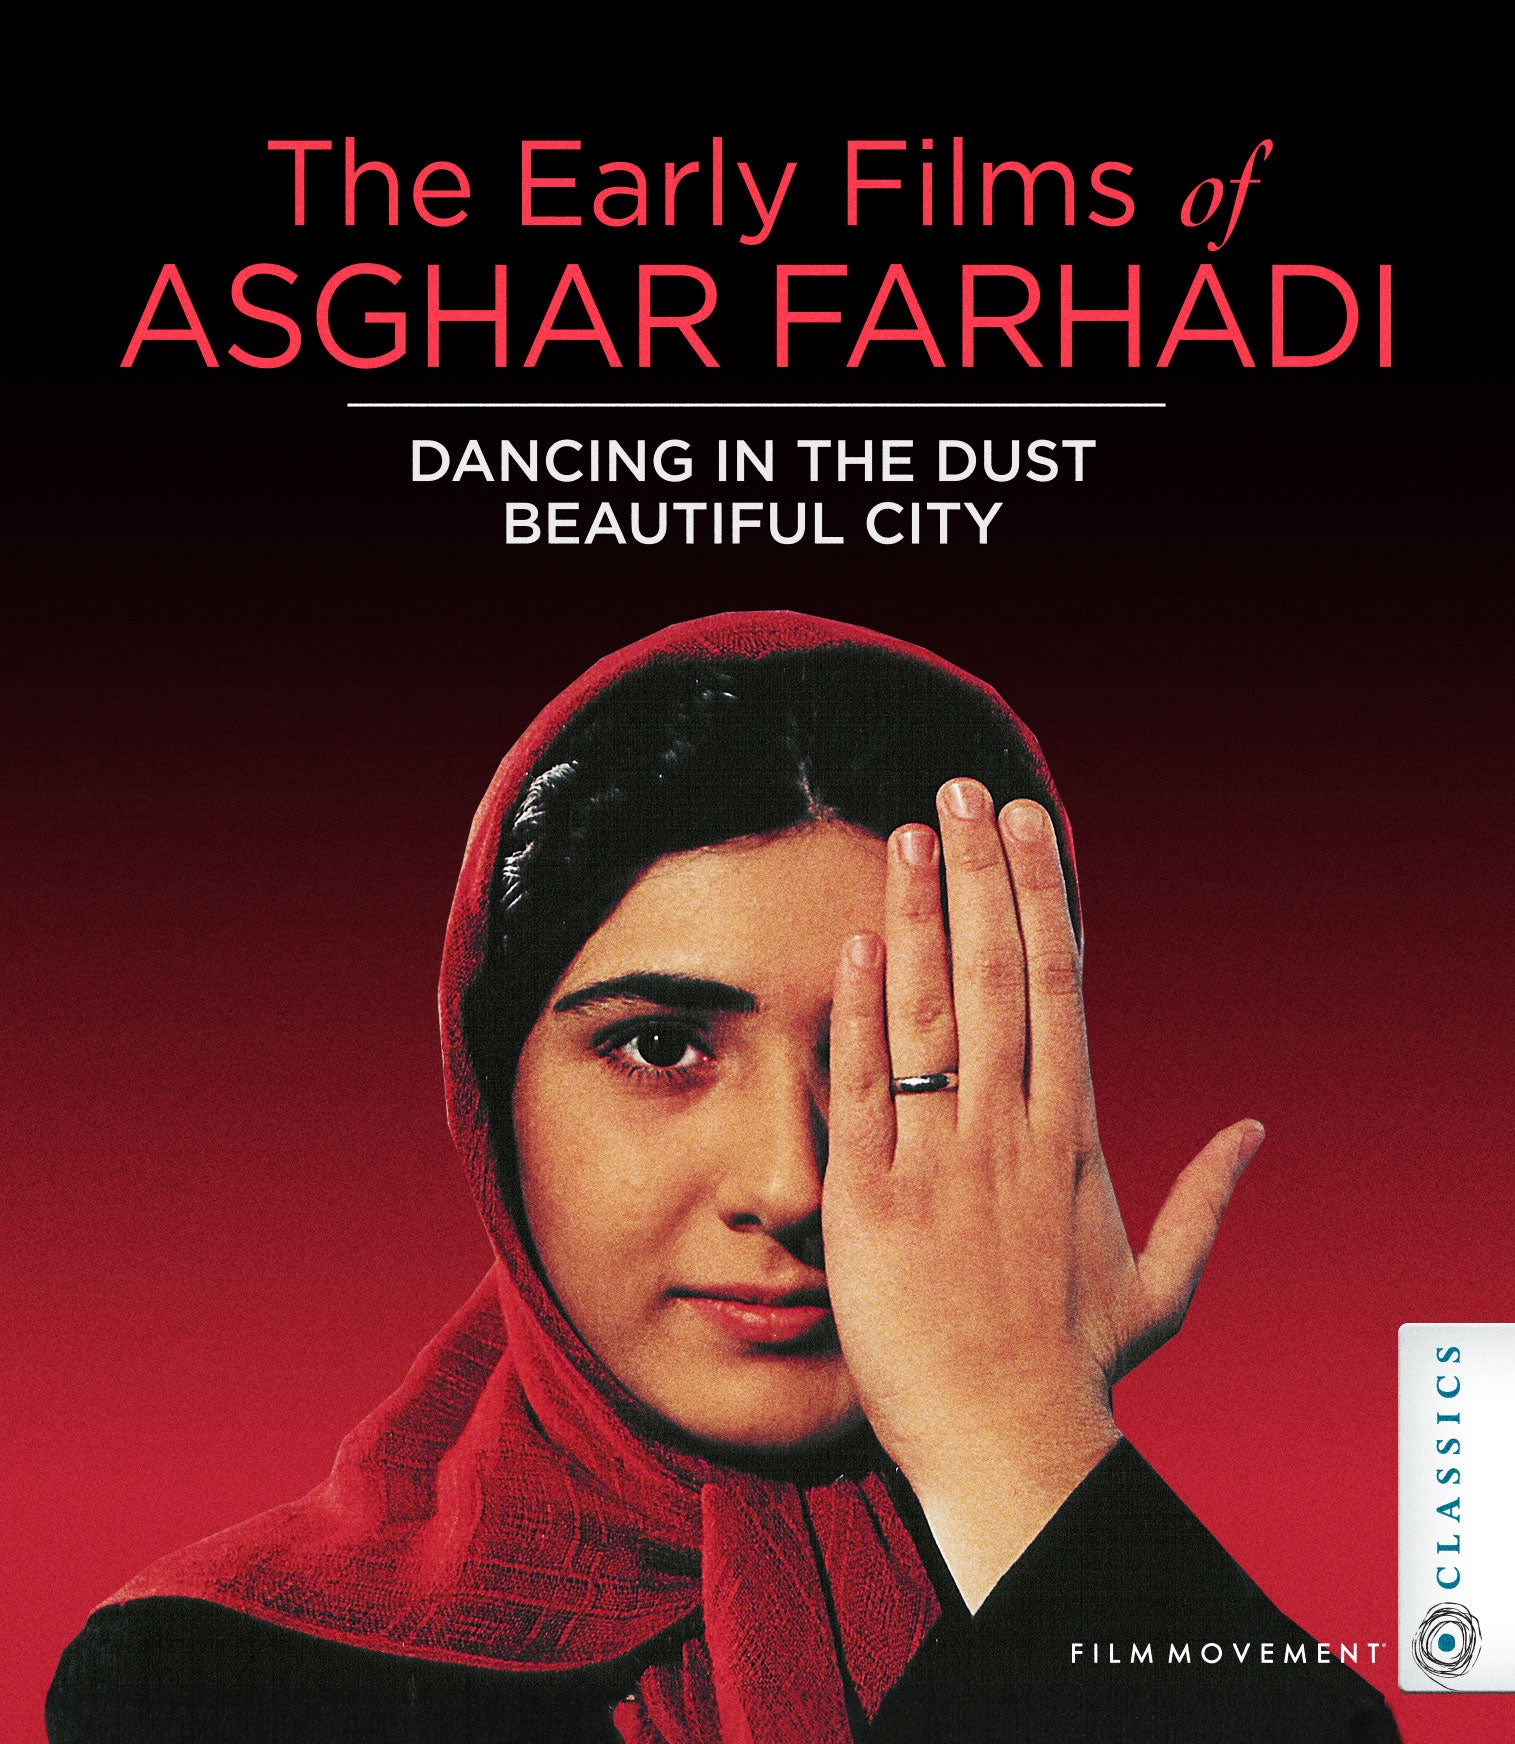 THE EARLY FILMS OF ASGHAR FARHADI (LIMITED EDITION) BLU-RAY